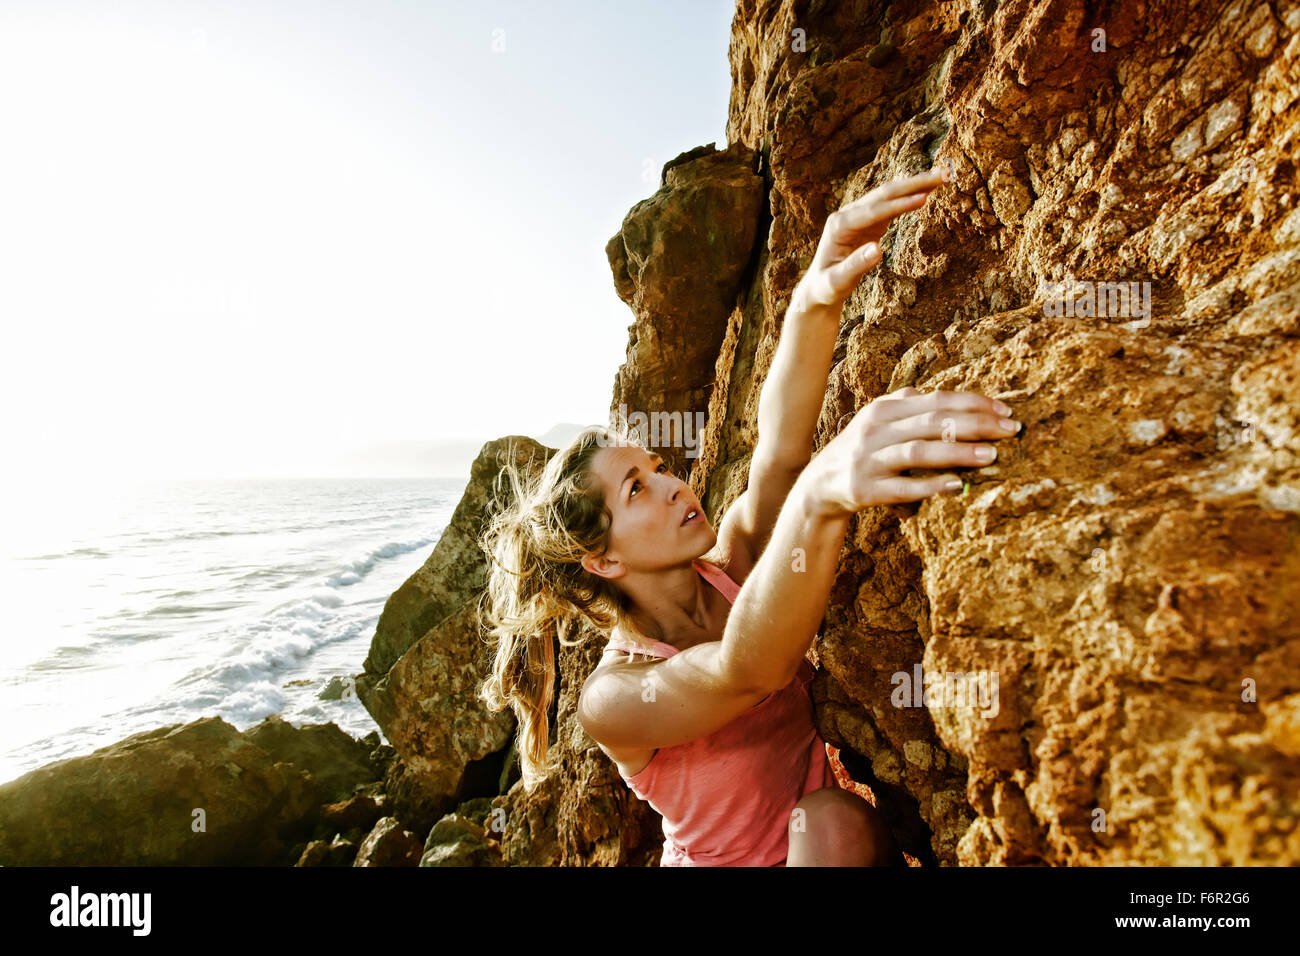 Woman climbing rock formation Stock Photo